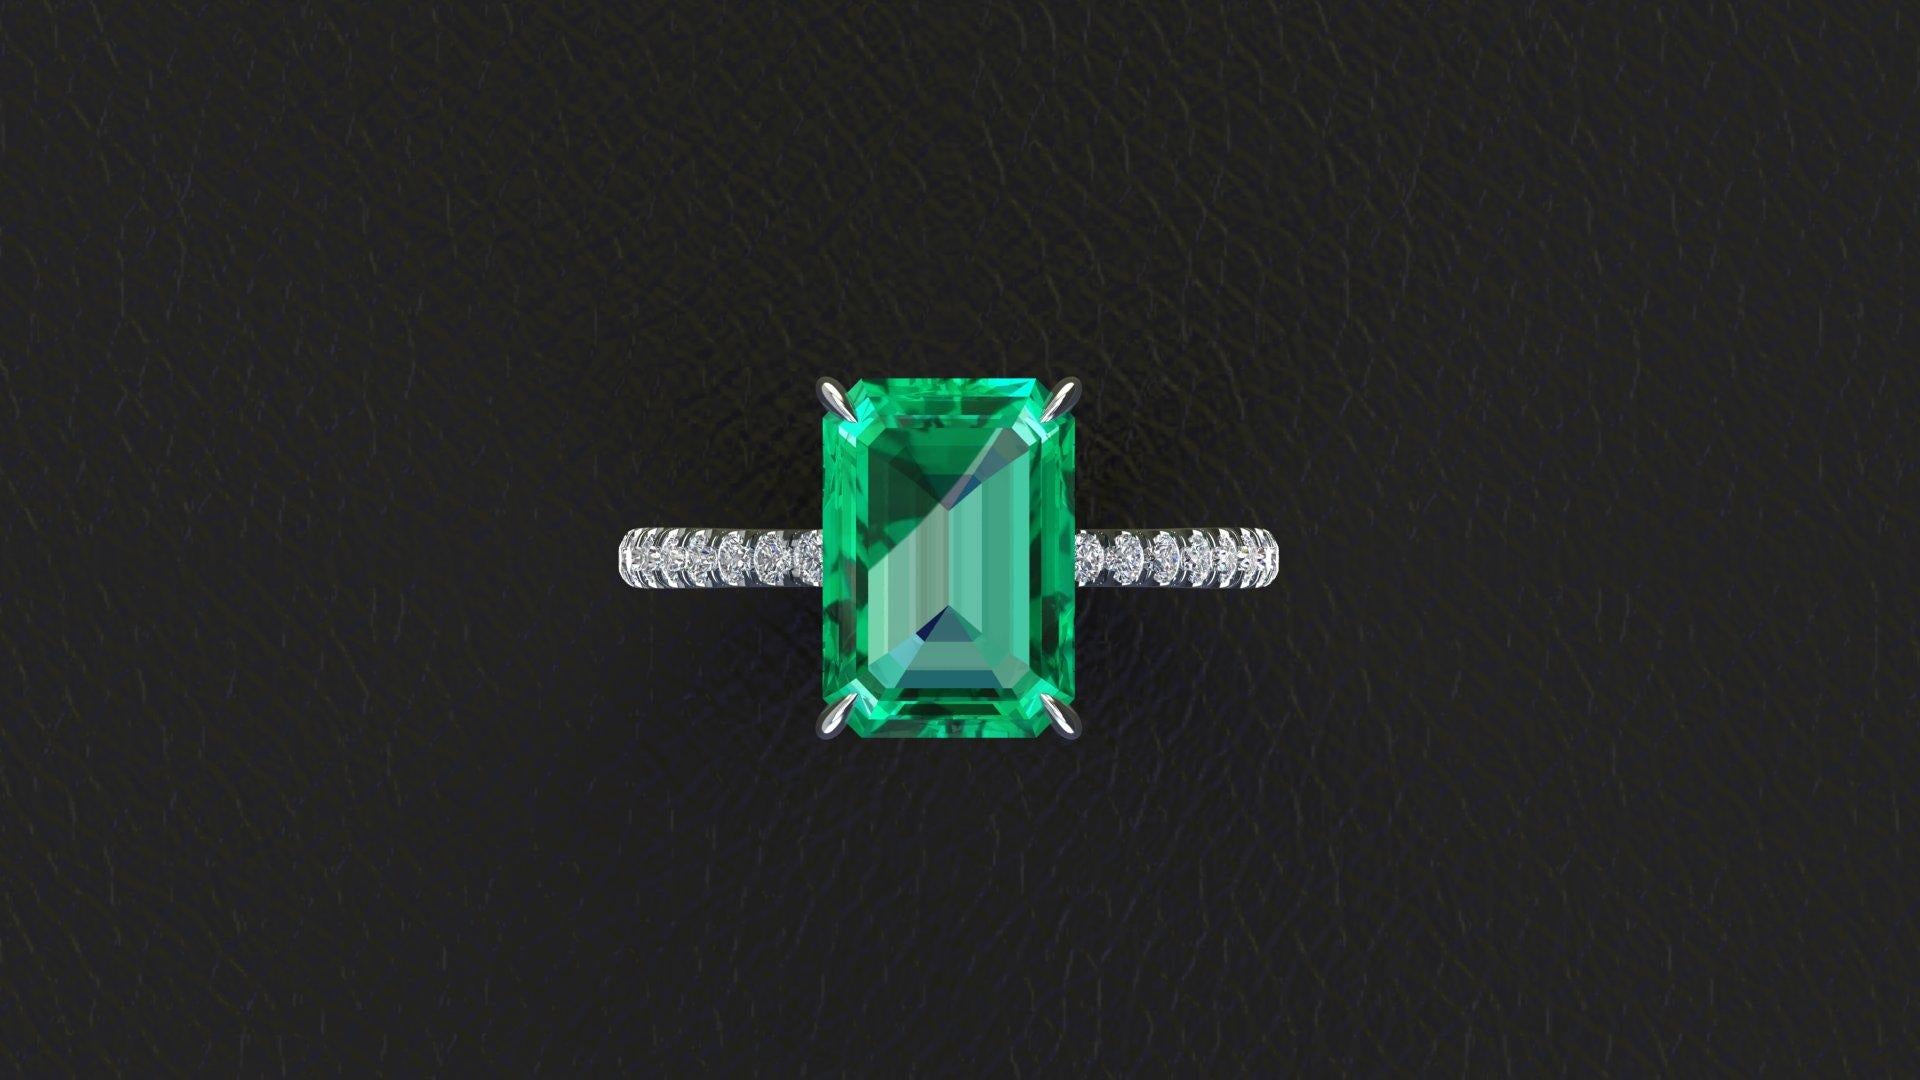  3,27 Karat Smaragd, aus Kolumbien, sehr hohe Qualität Farbe und Transparenz, 